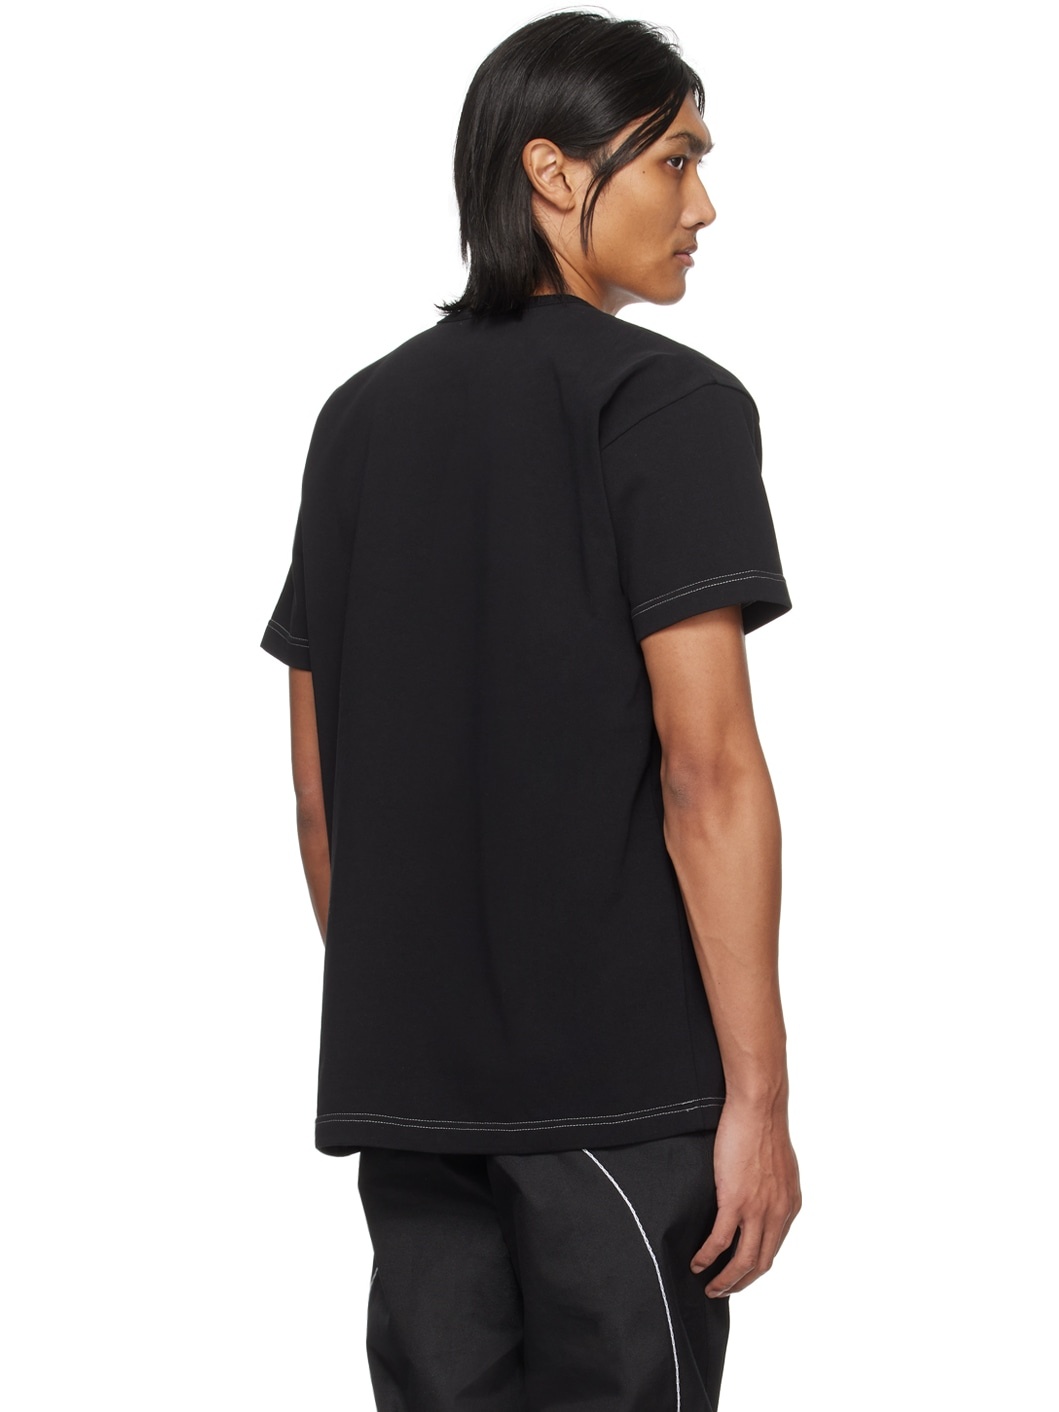 Black Printed T-Shirt - 3